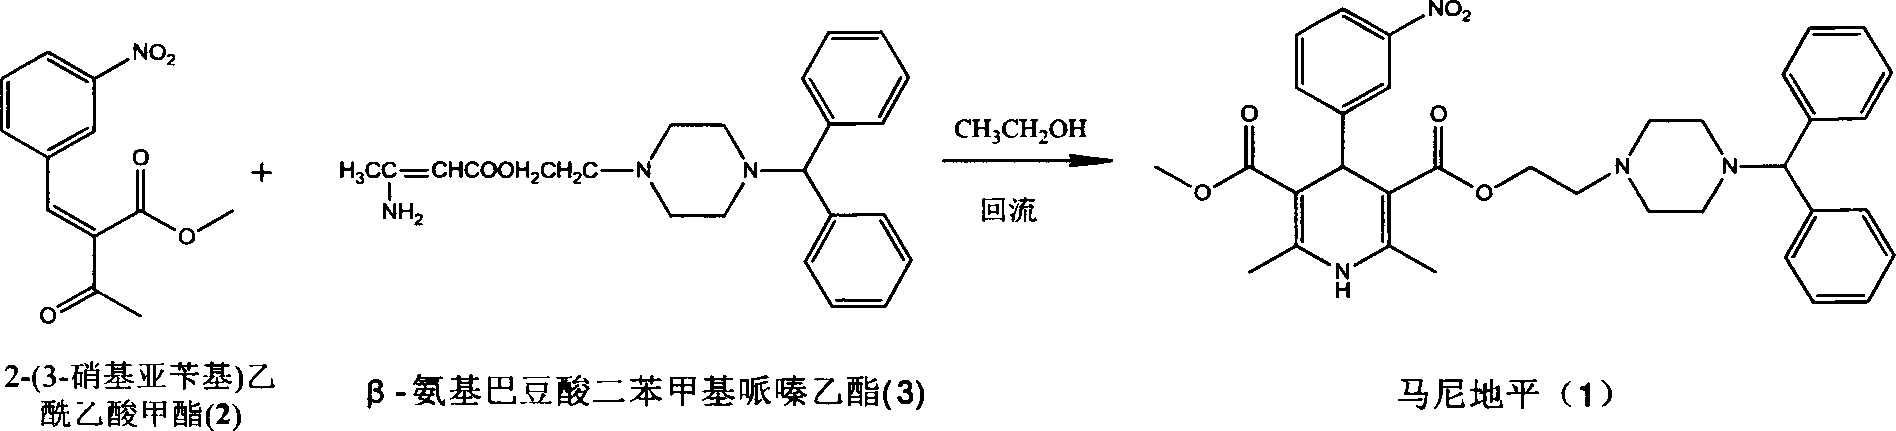 Calcium ion channels antagonist manidipine preparation method